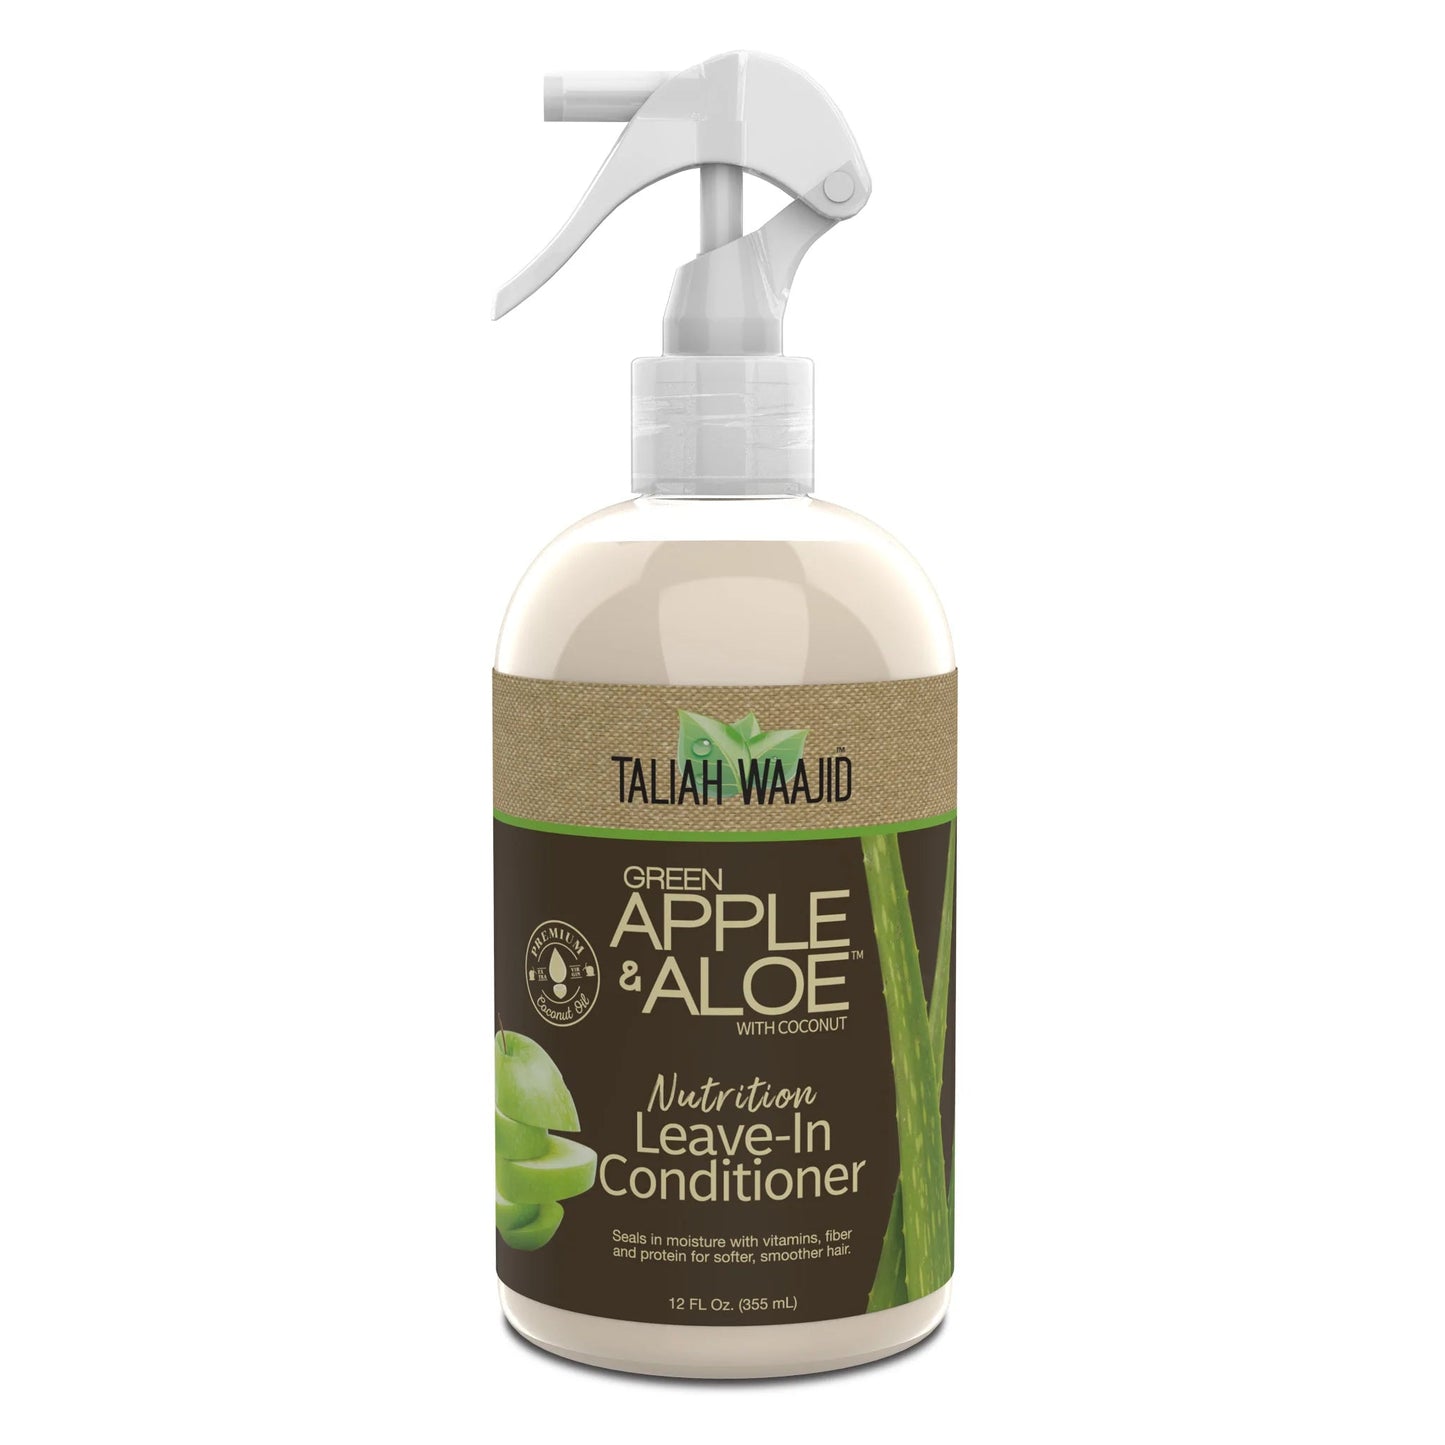 Taliah Waajid Apple & Aloe Leave-in Conditioner